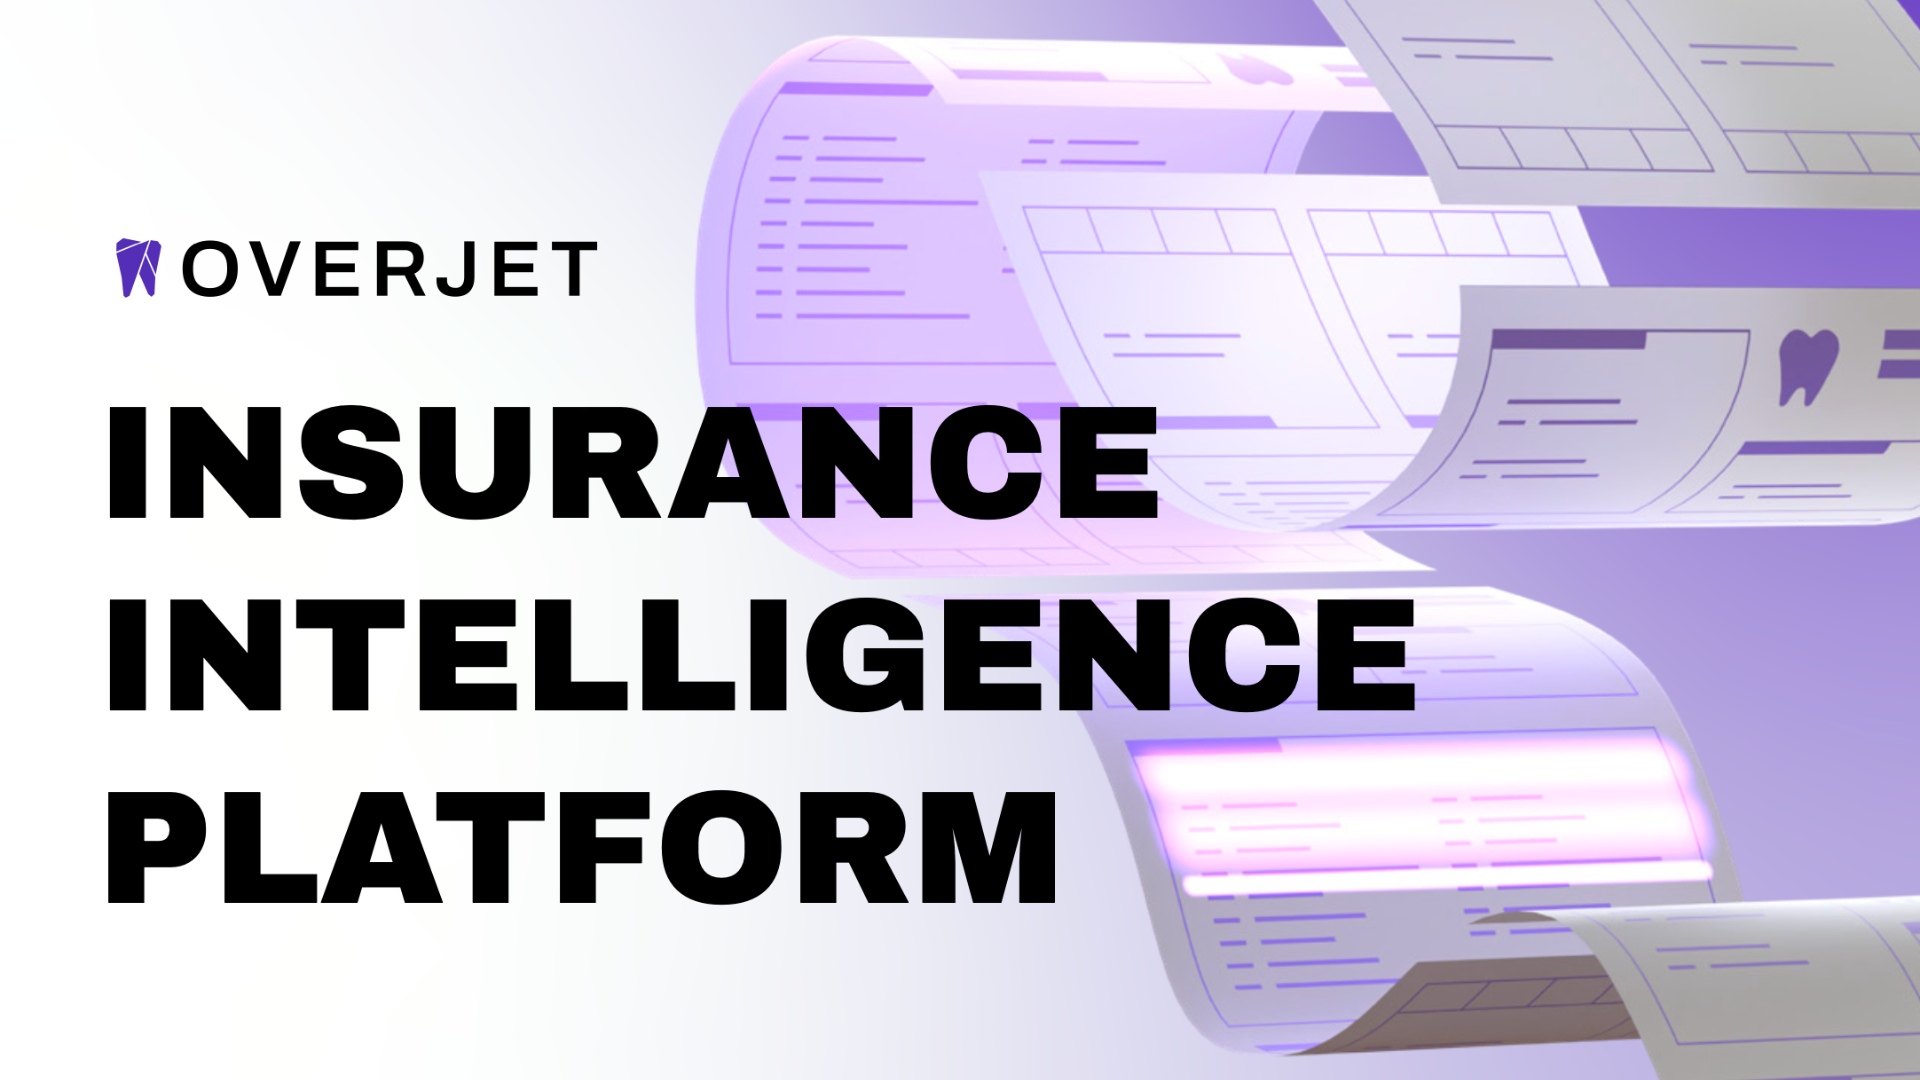 Overjet Launches the Next Evolution of Insurance Intelligence Platform